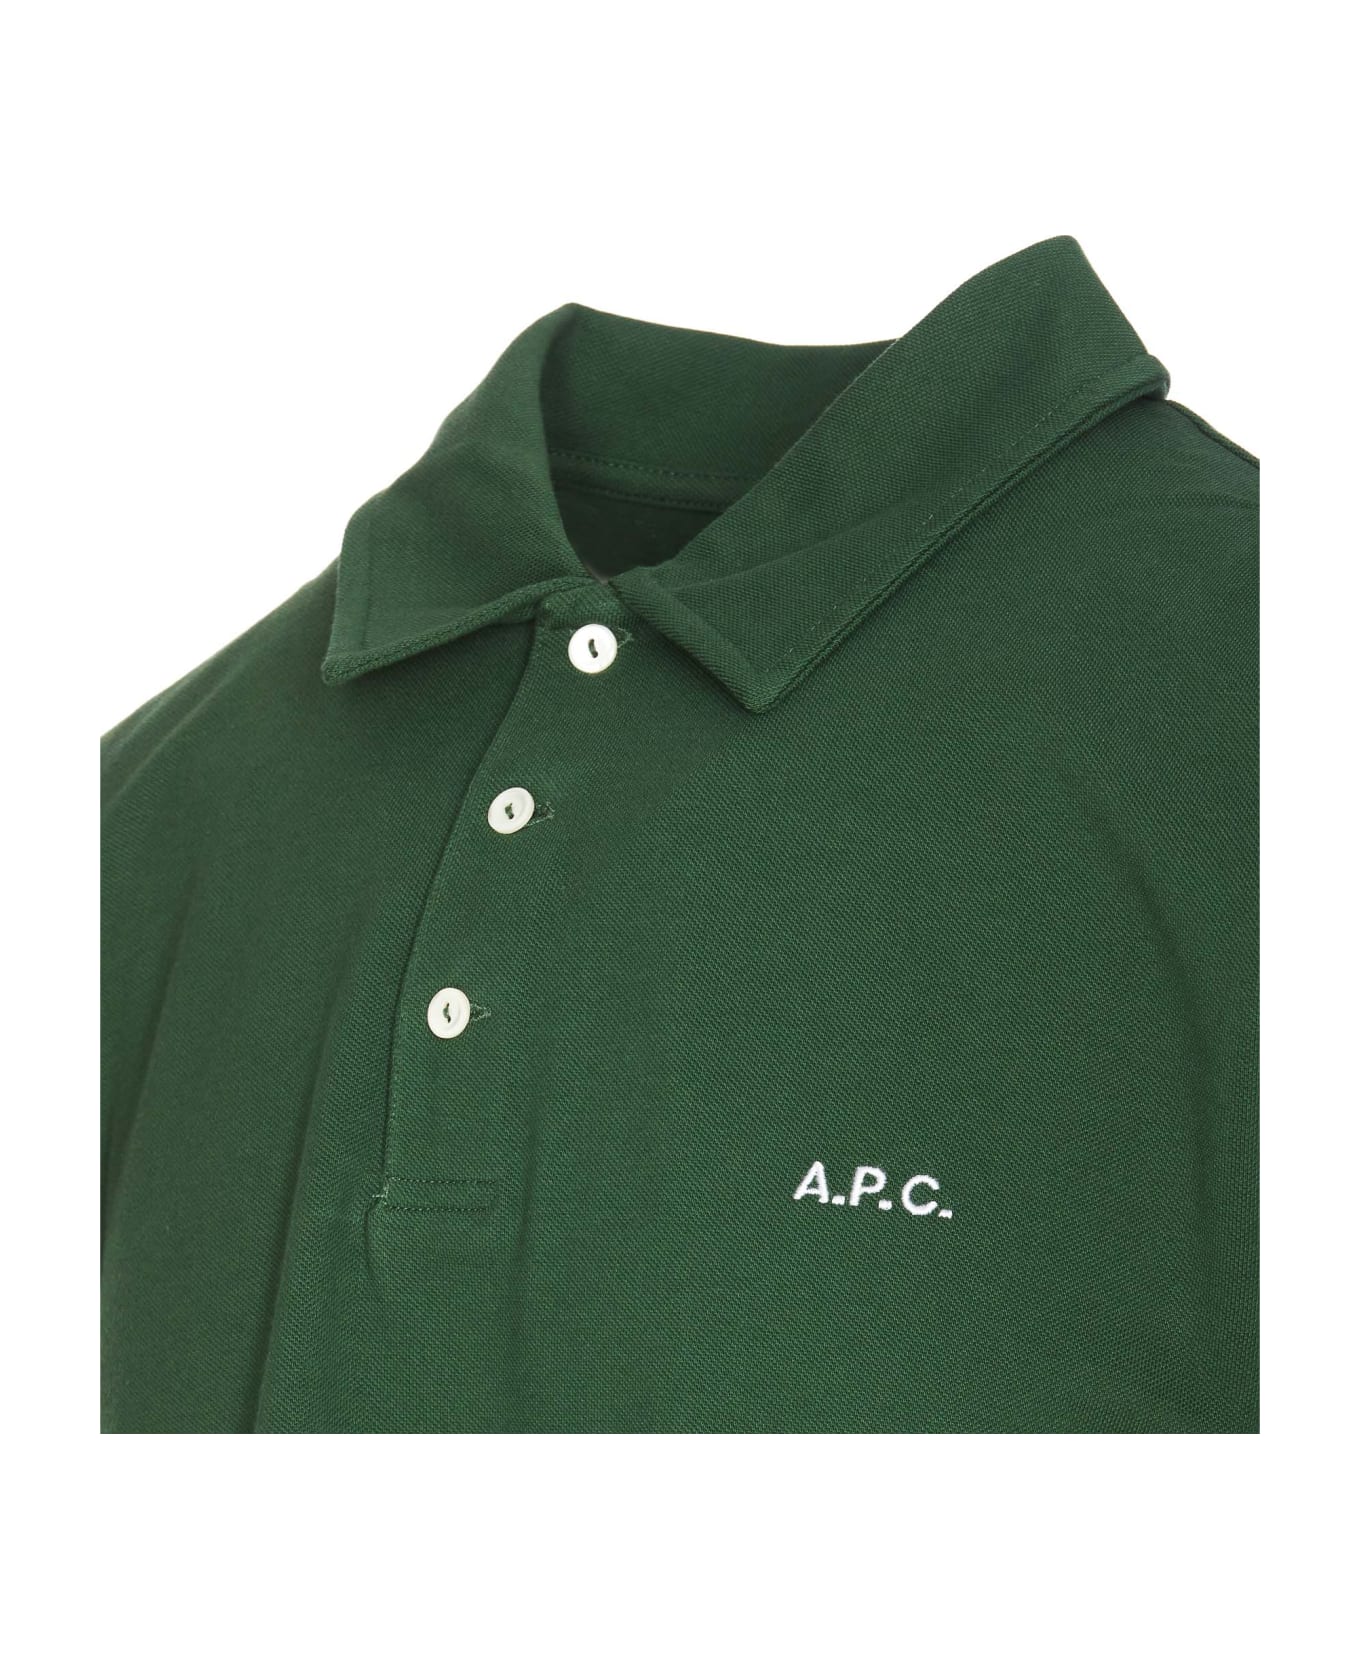 A.P.C. Austin Polo - Green